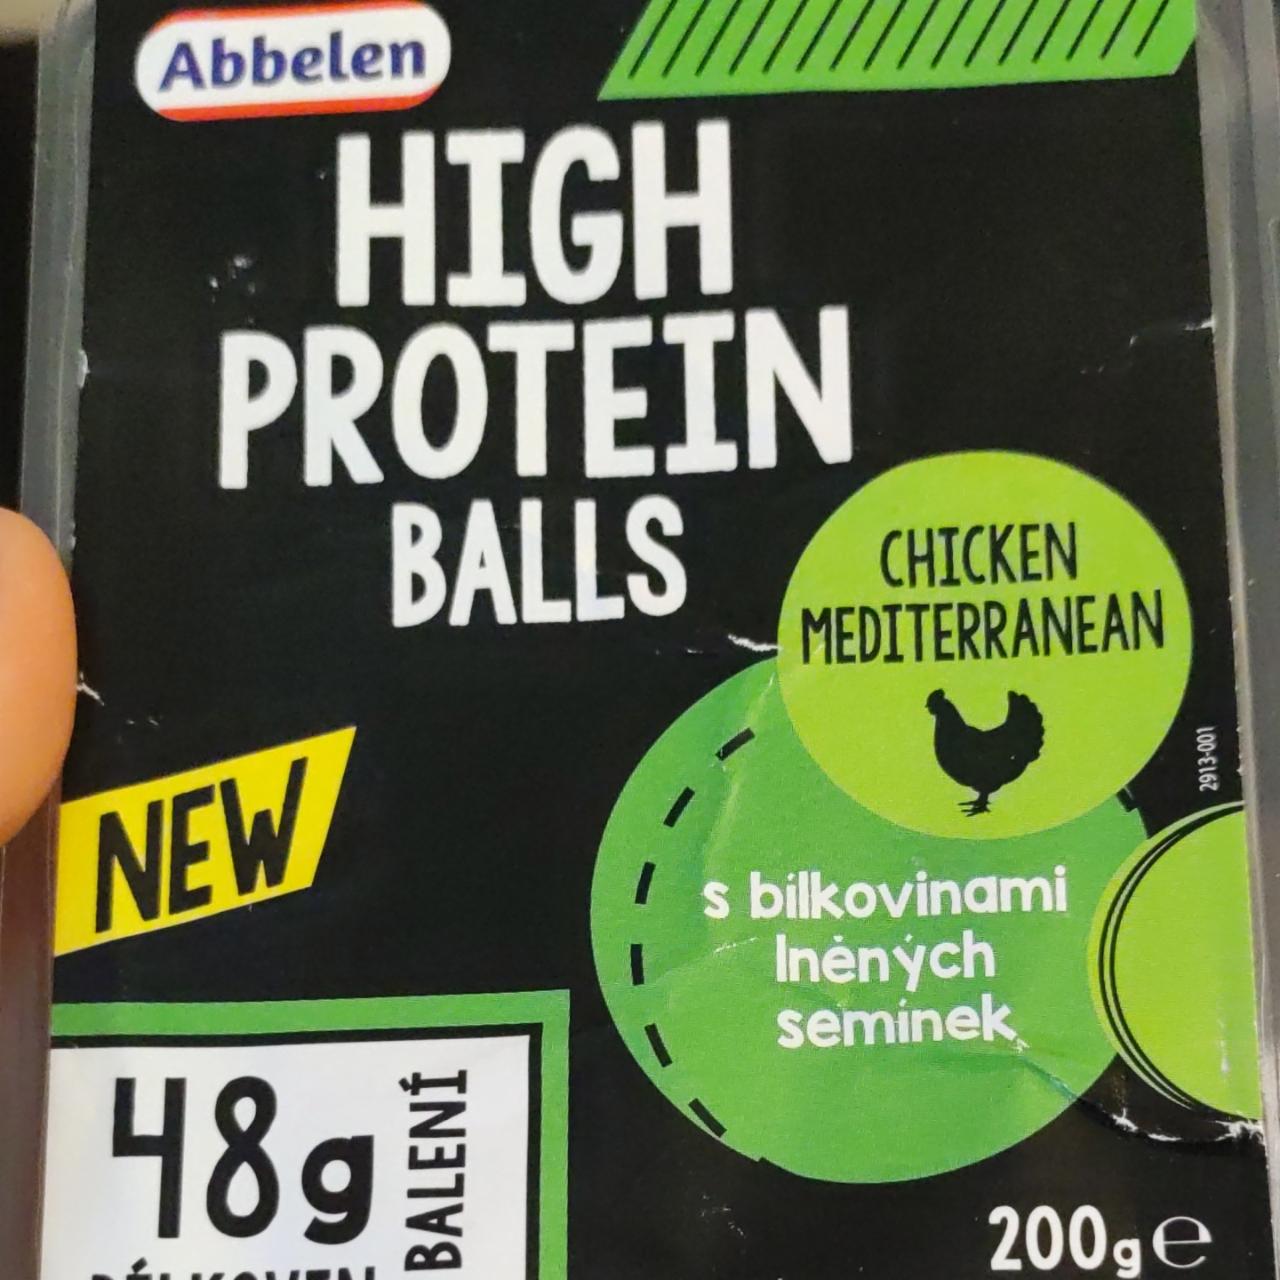 Фото - High protein balls Abbelen